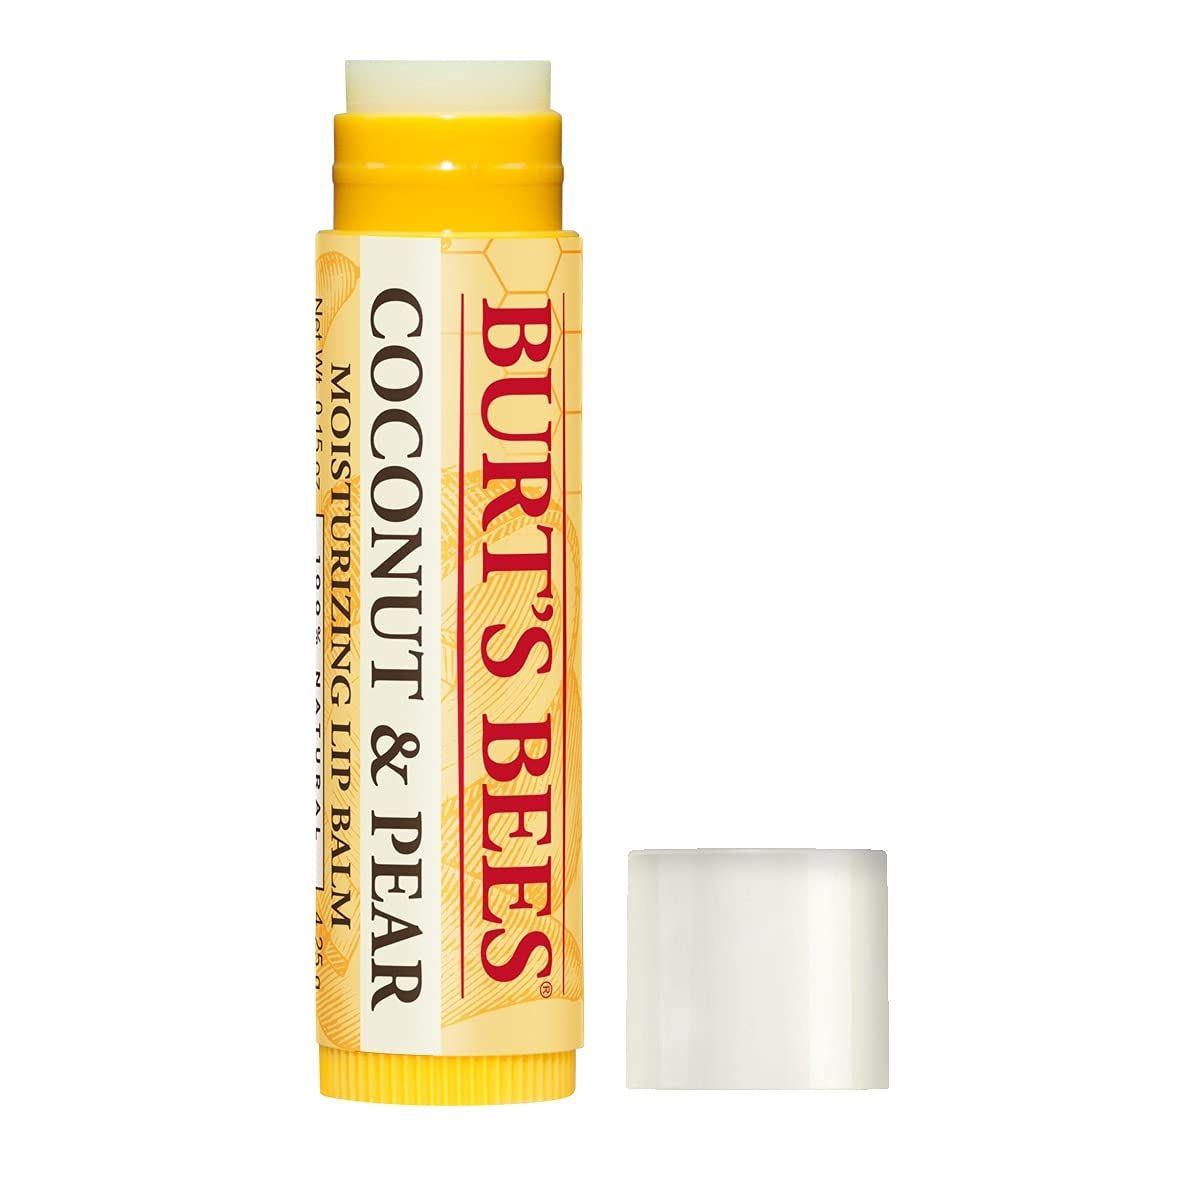 Burt's Bees® 100% Natural Moisturizing Lip Balm, Coconut & Pear - 1 ct